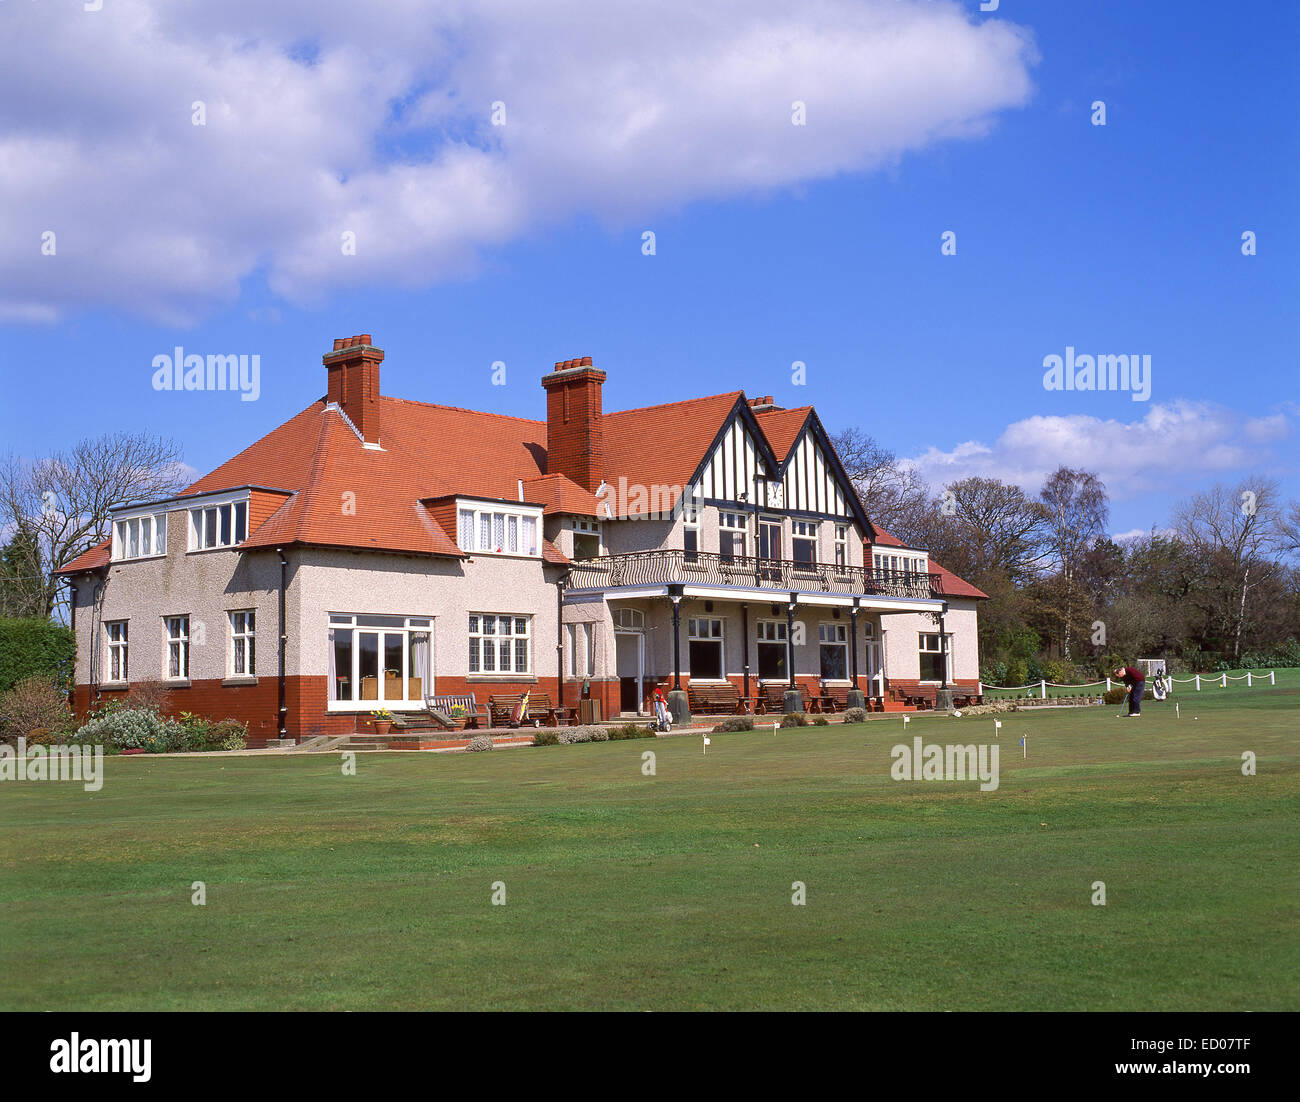 Club house at Ormskirk Golf Club, Ormskirk, Lancashire, England, United Kingdom Stock Photo